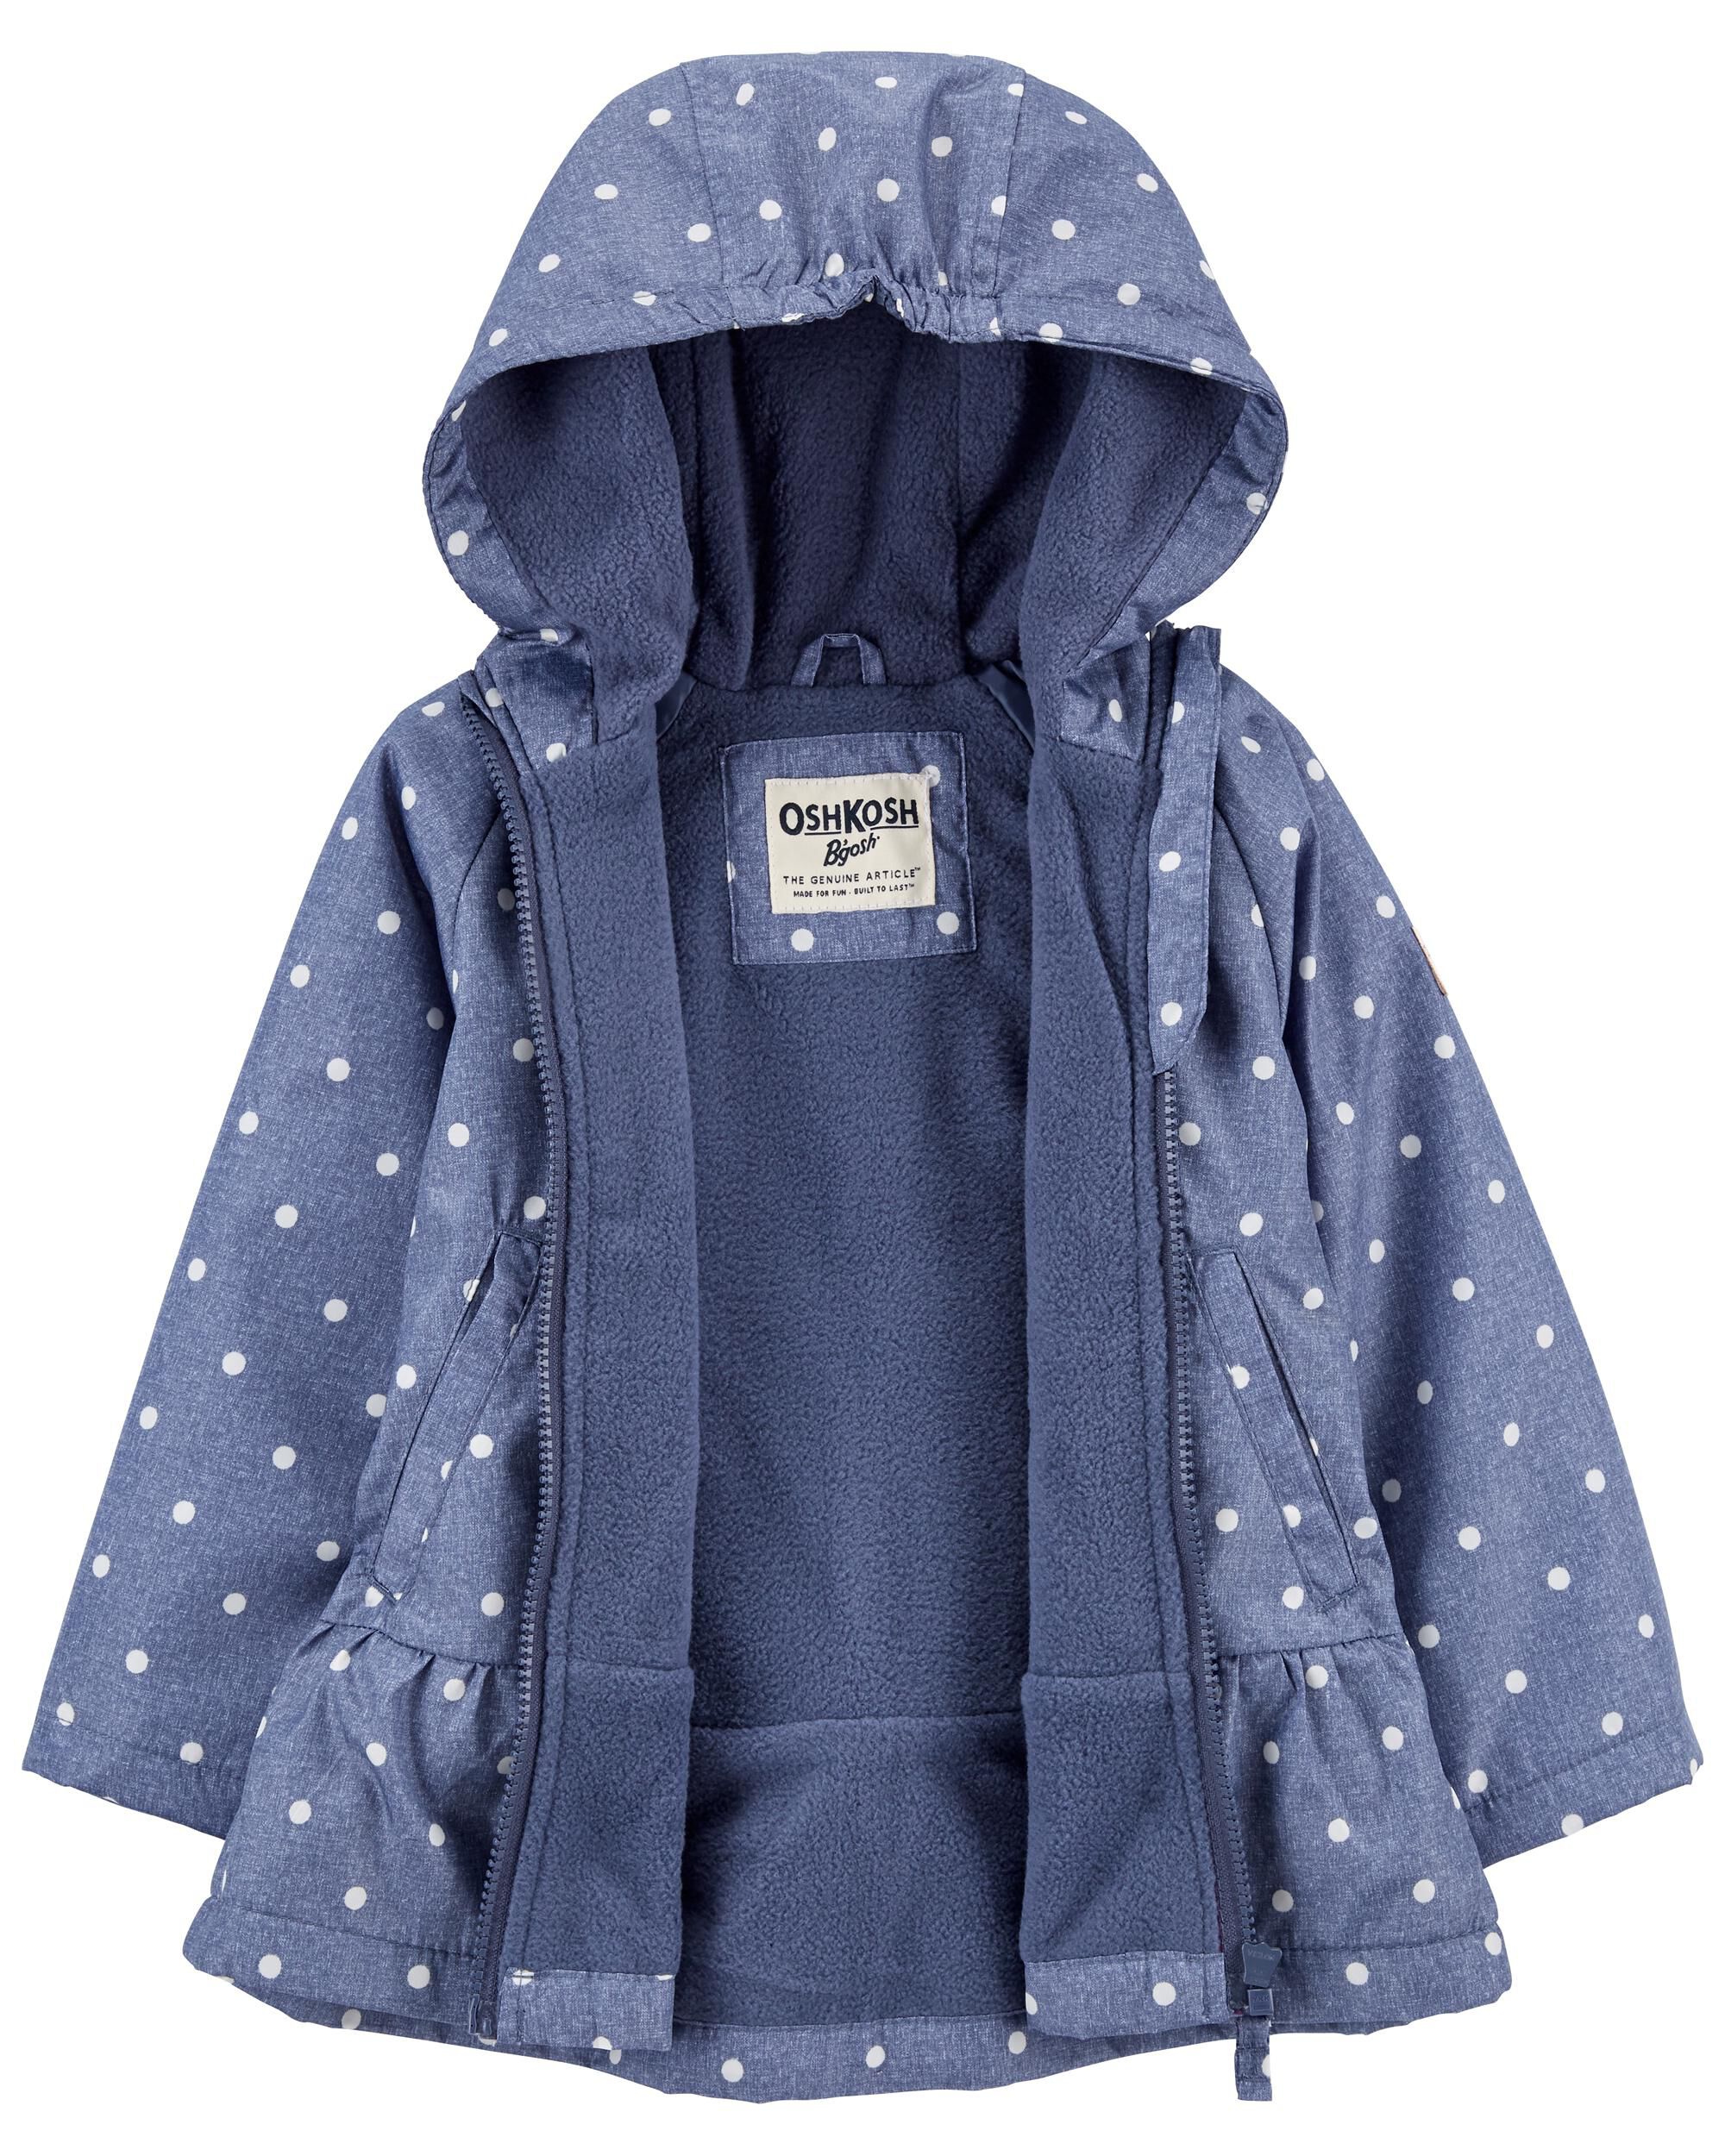 Carter's Toddler Girls' Poppy Red Fleece Lined Jacket Size 2T 3T 4T 